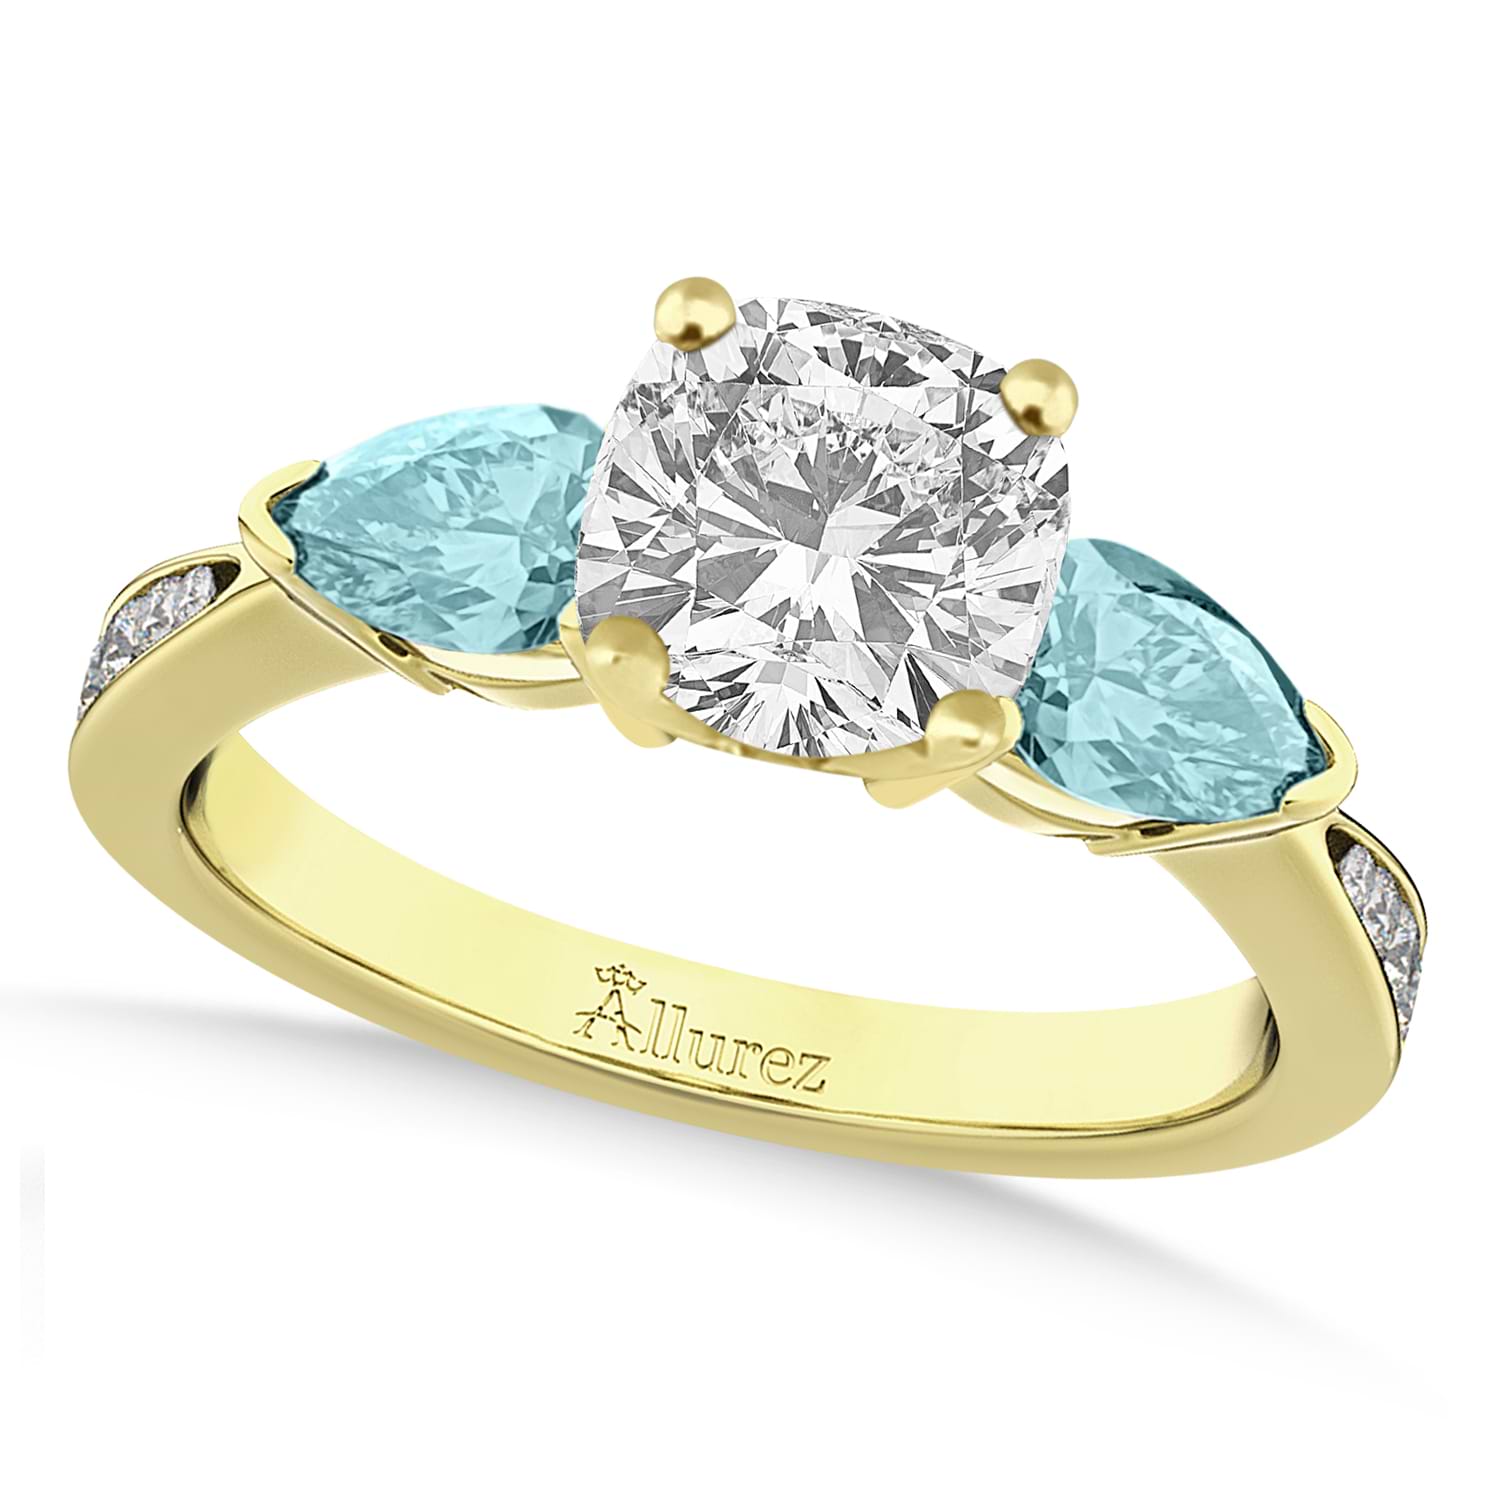 Cushion Diamond & Pear Aquamarine Engagement Ring 14k Yellow Gold (1.29ct)